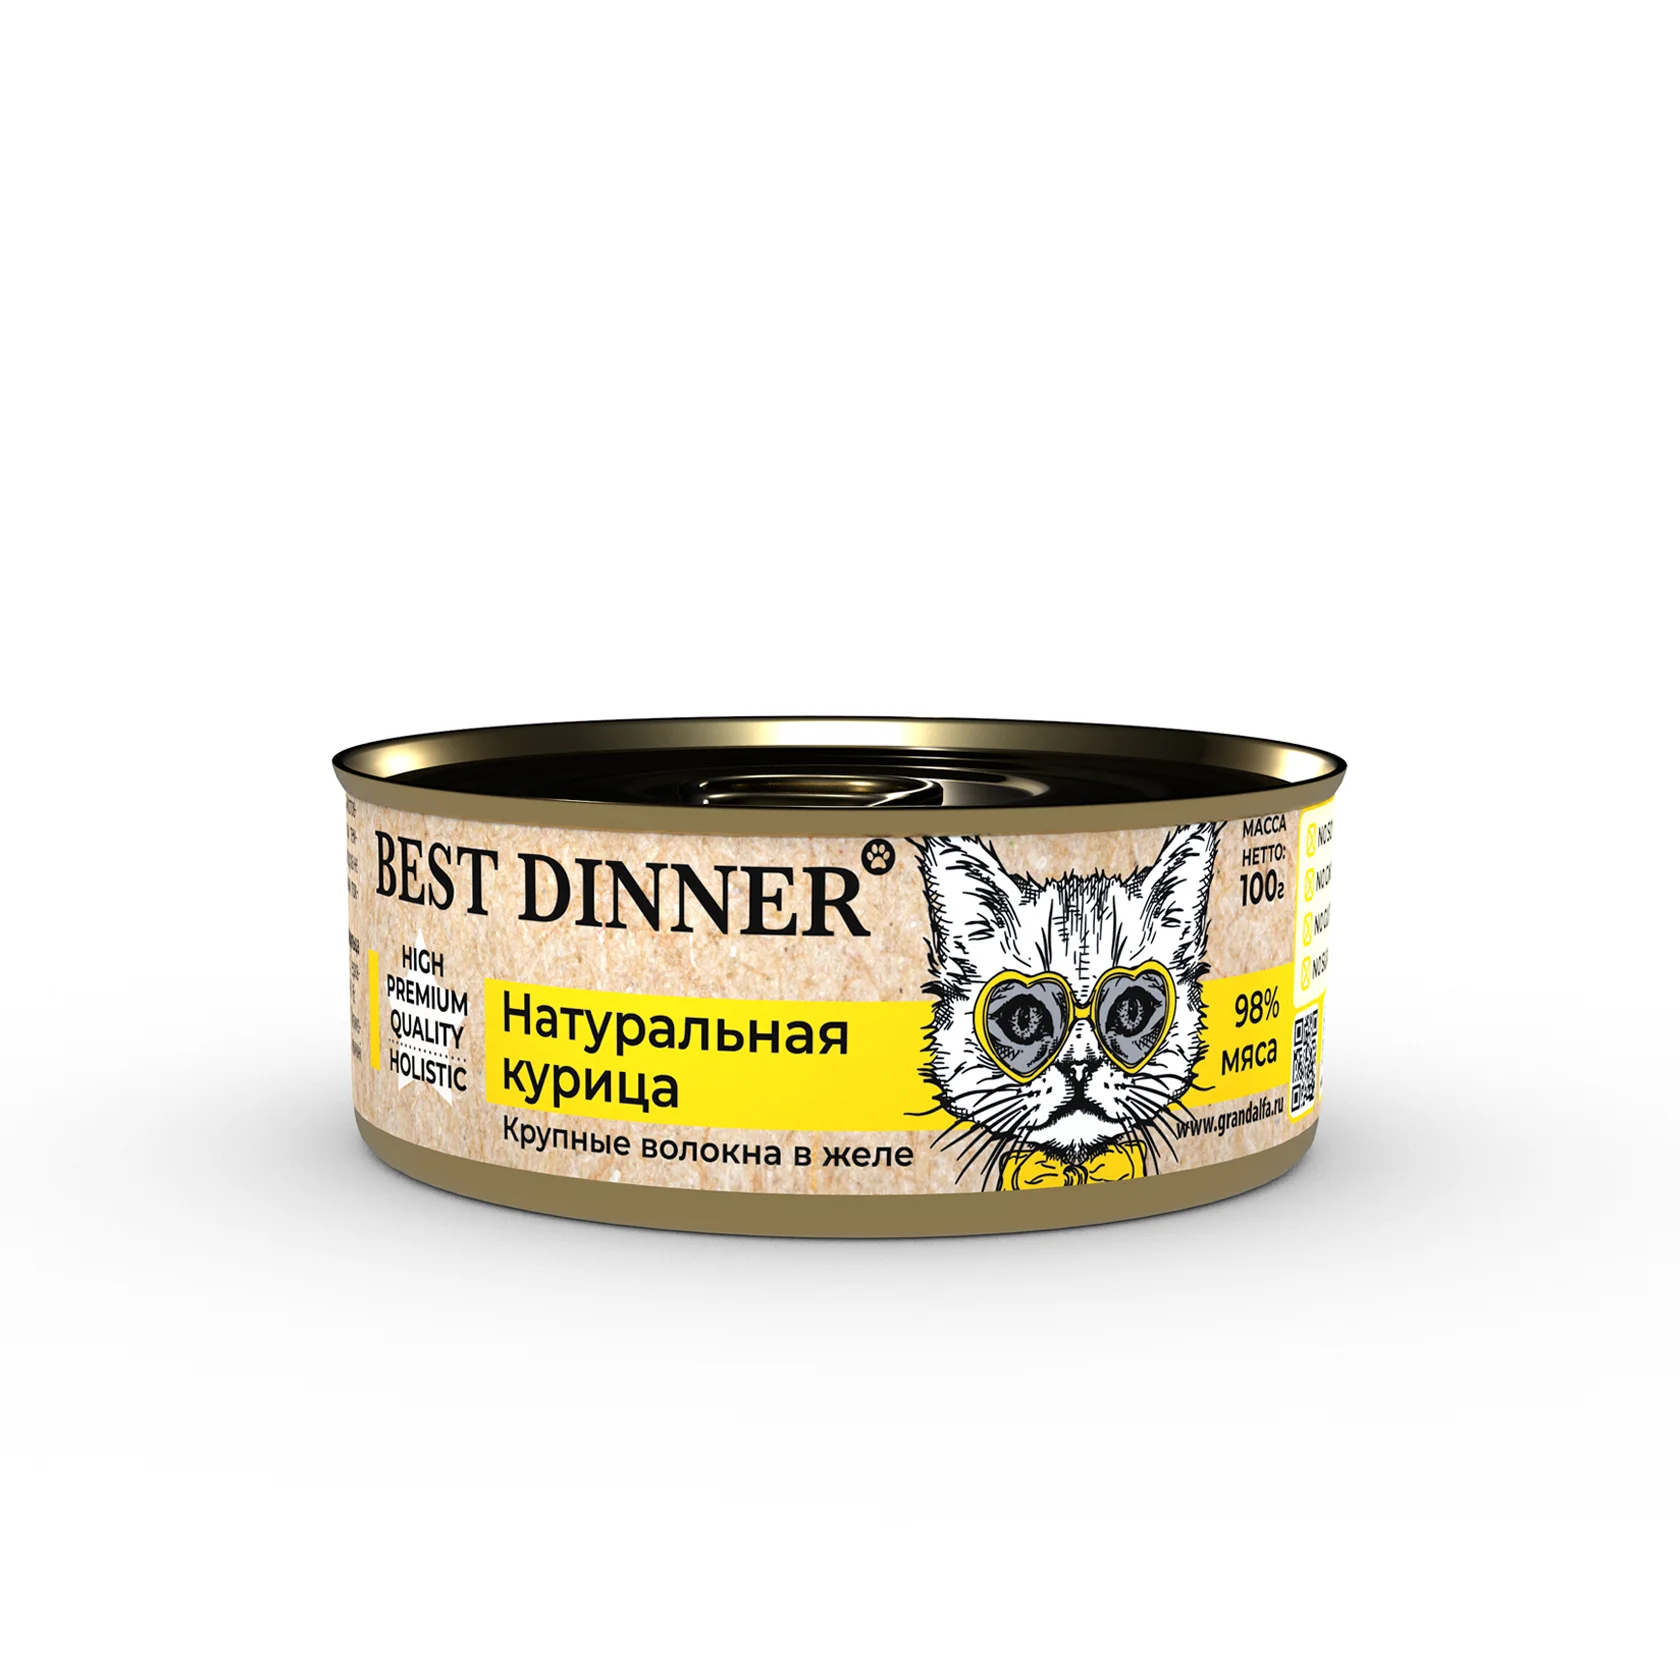 Best Dinner Higt Premium консервы для кошек и котят "Натуральная курица" 100г фото, цены, купить